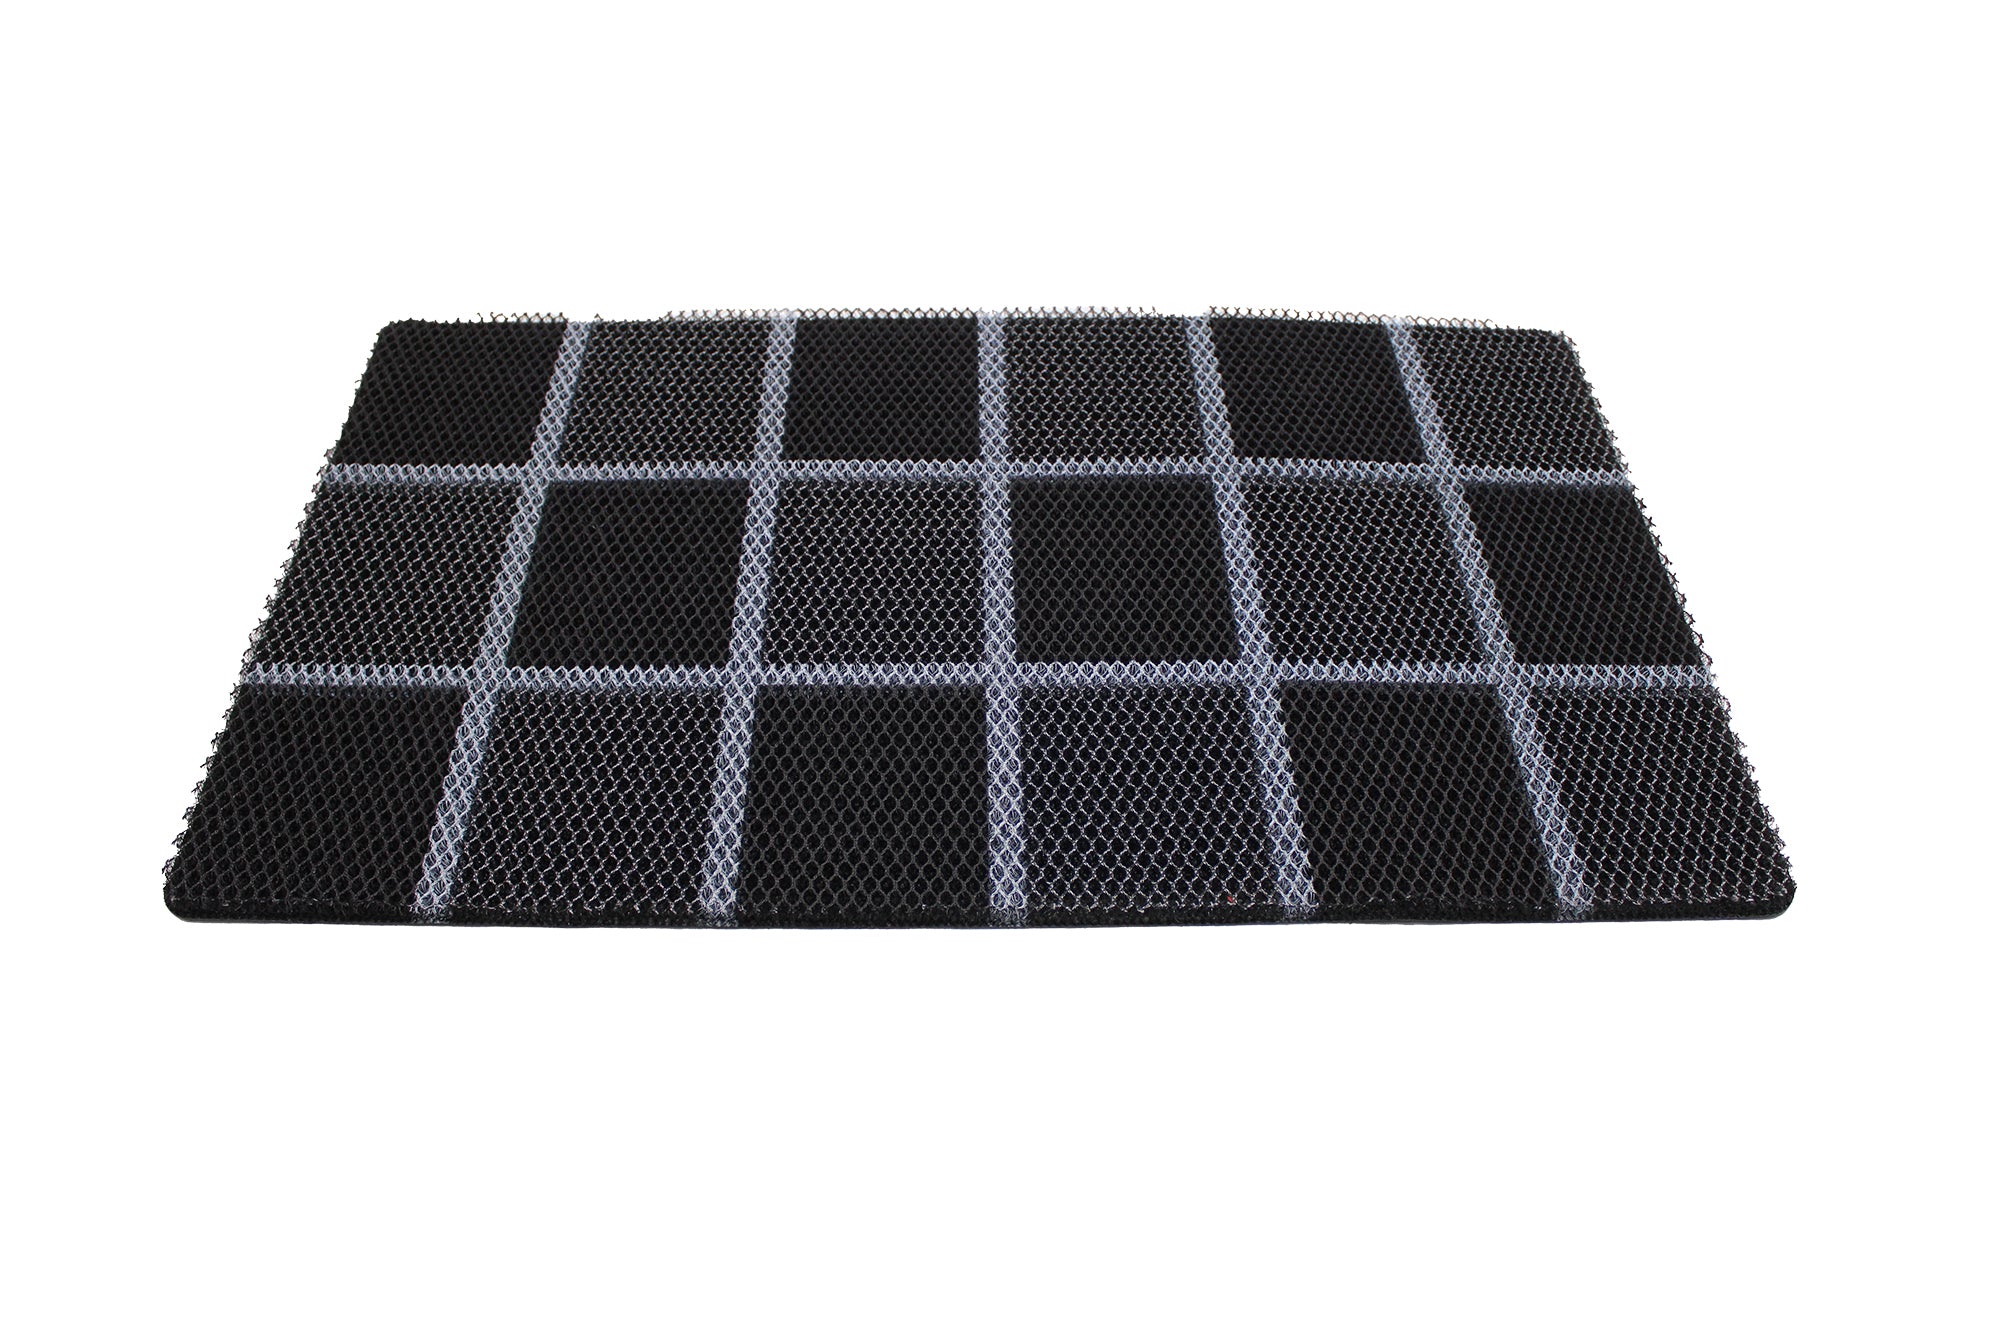 75cmx44cm Water Resistant Abrasive Fiber Checkered Floor Mat